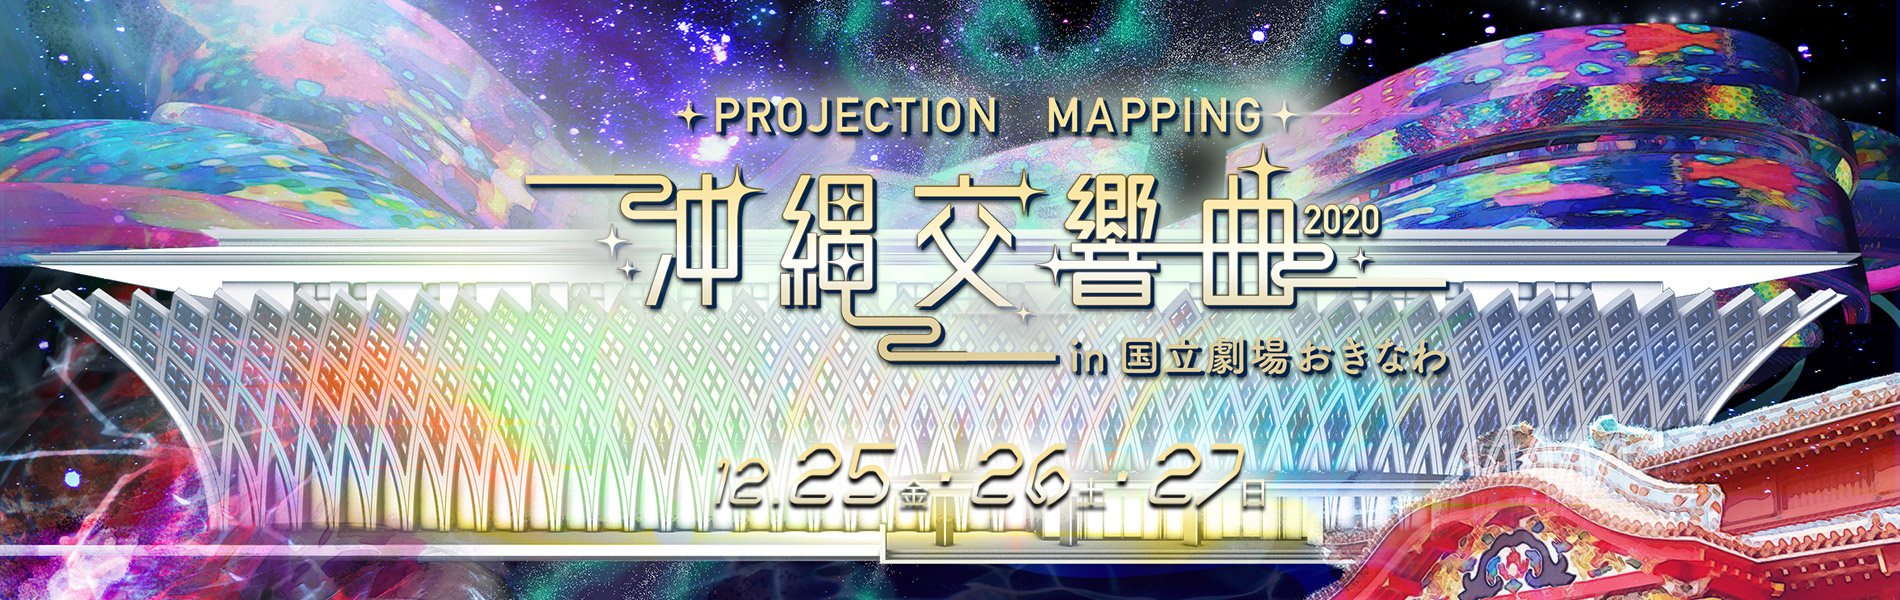 PROJECTION MAPPING 沖縄交響曲2020 in 国立劇場おきなわ